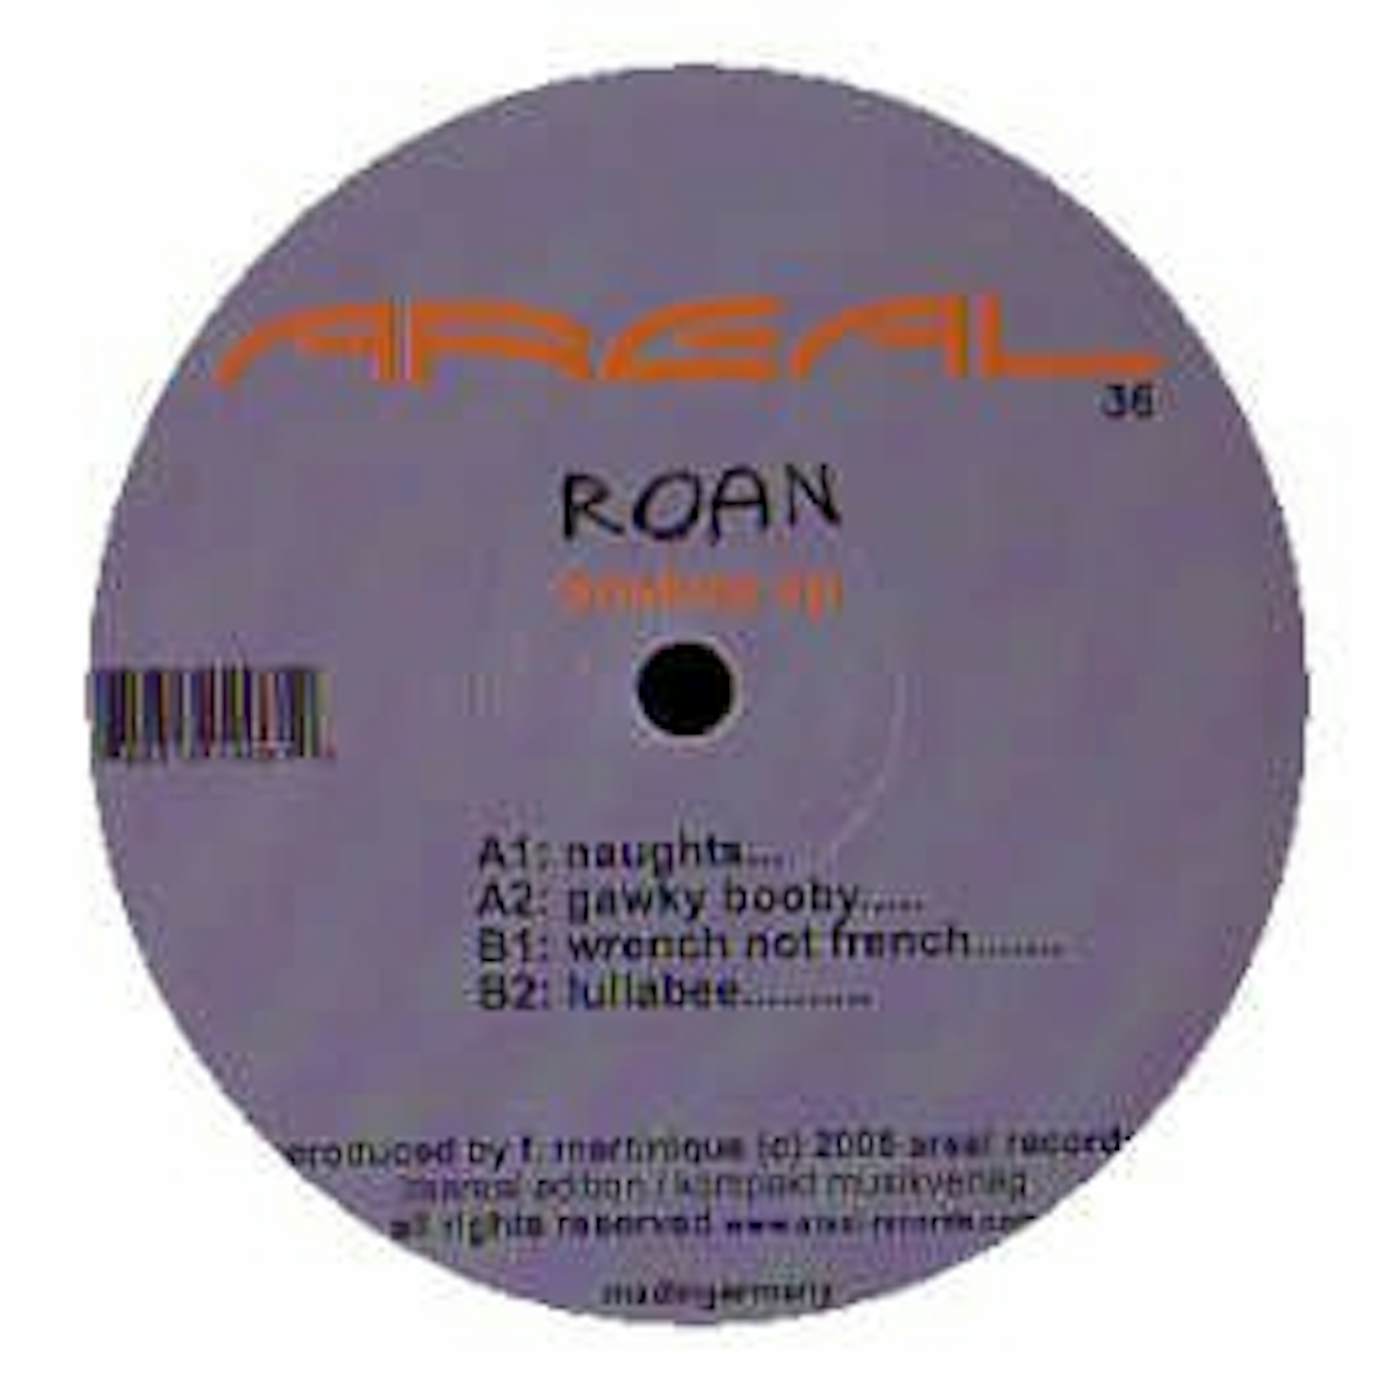 Roan BOSKOP Vinyl Record